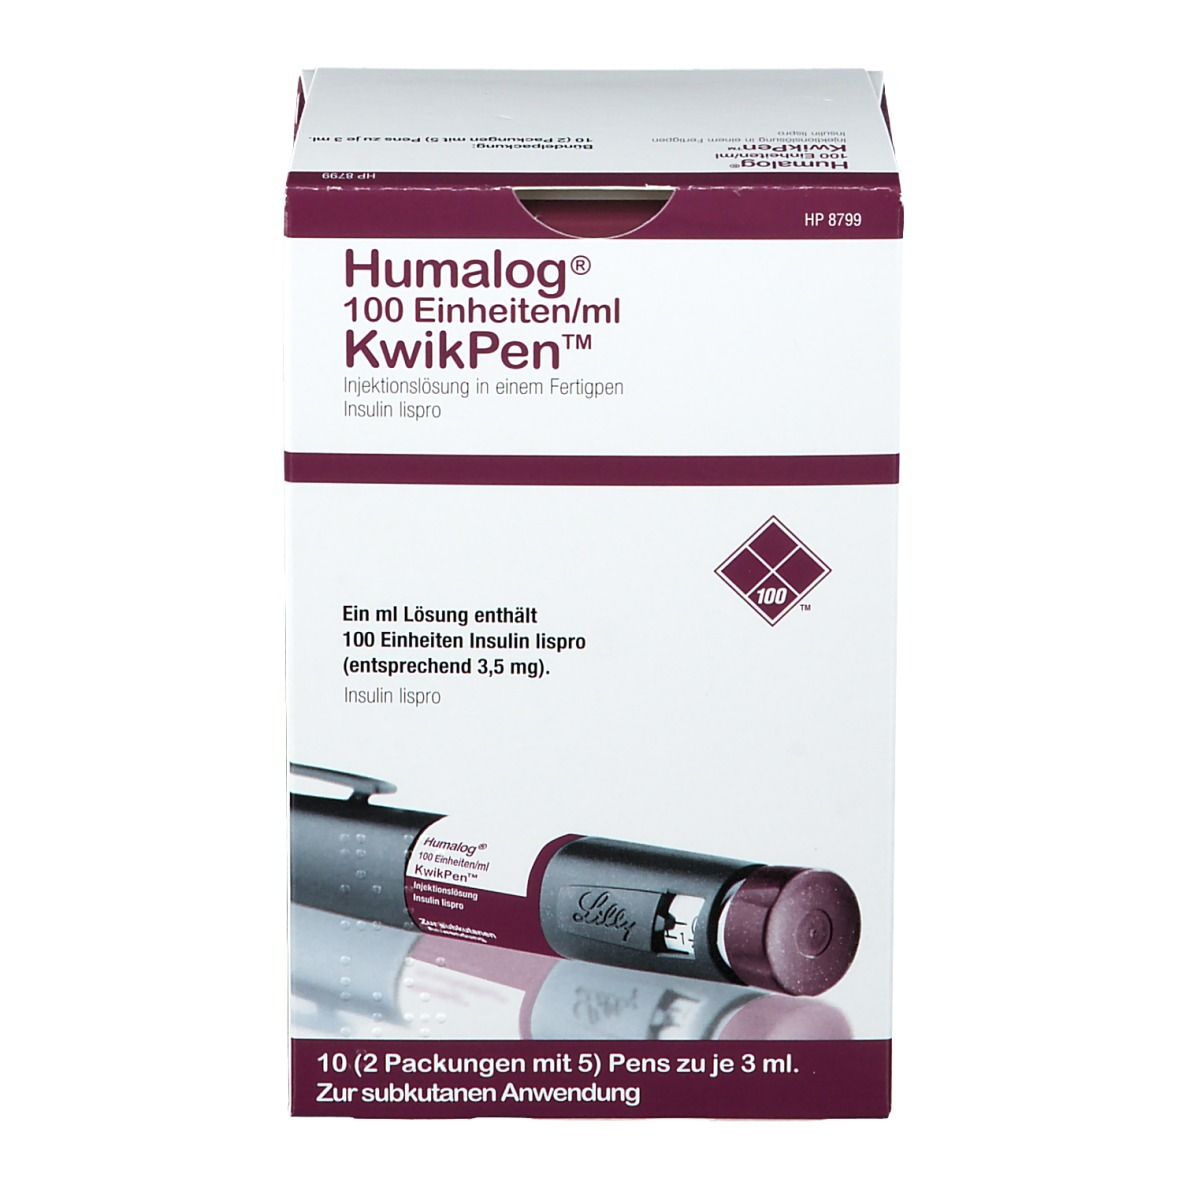 Humalog® 100 Einheiten/ml KwikPen™